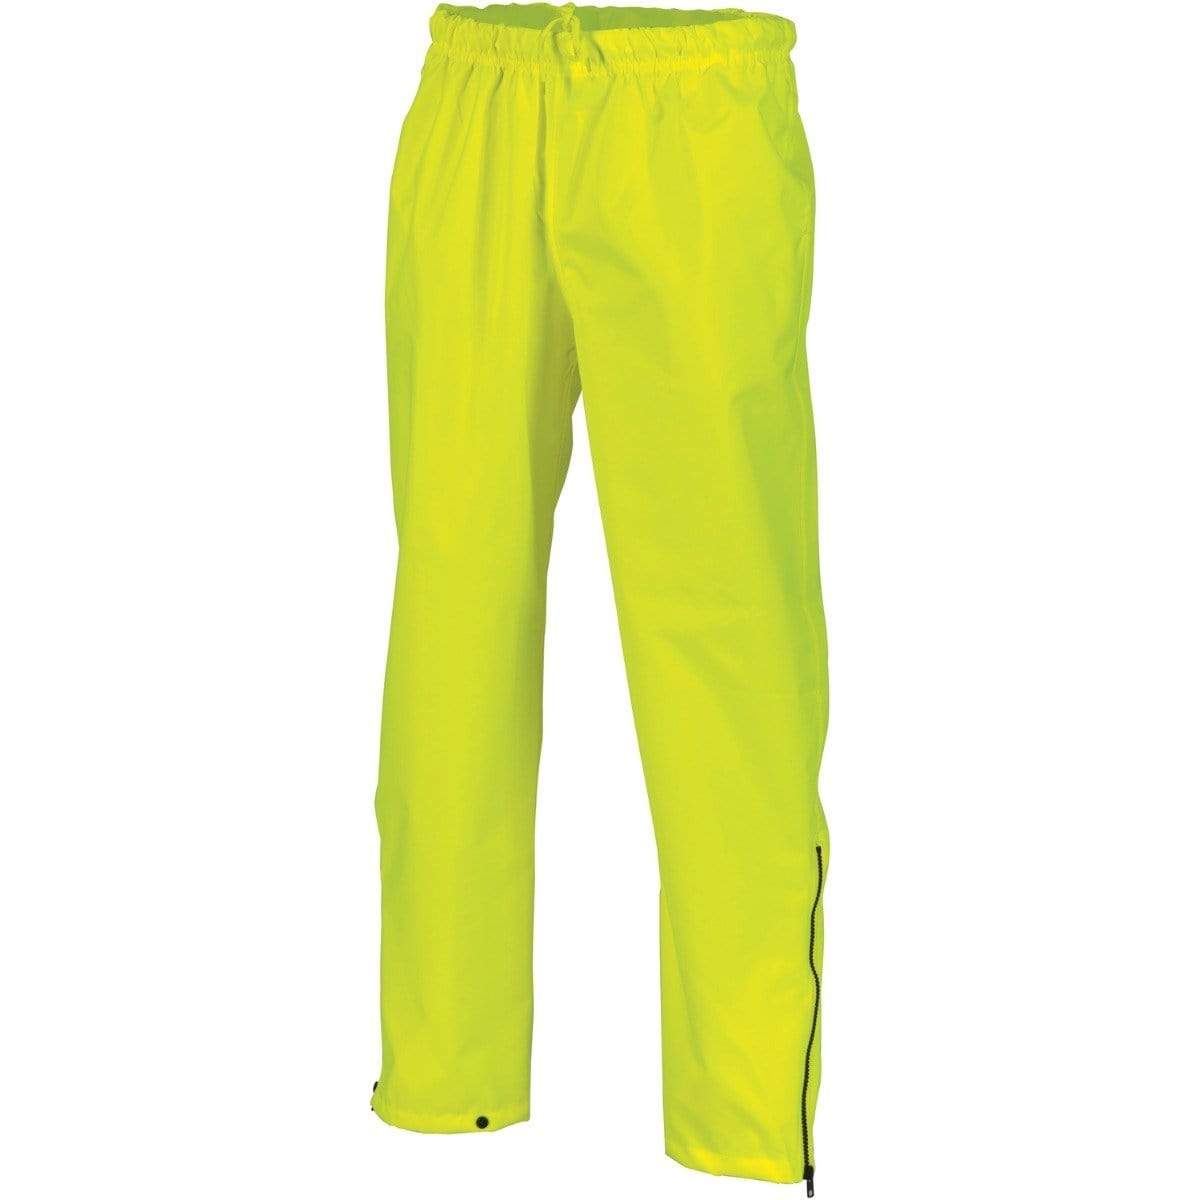 Dnc Workwear Hi-vis Day Breathable Rain Pants - 3874 Work Wear DNC Workwear Yellow S 